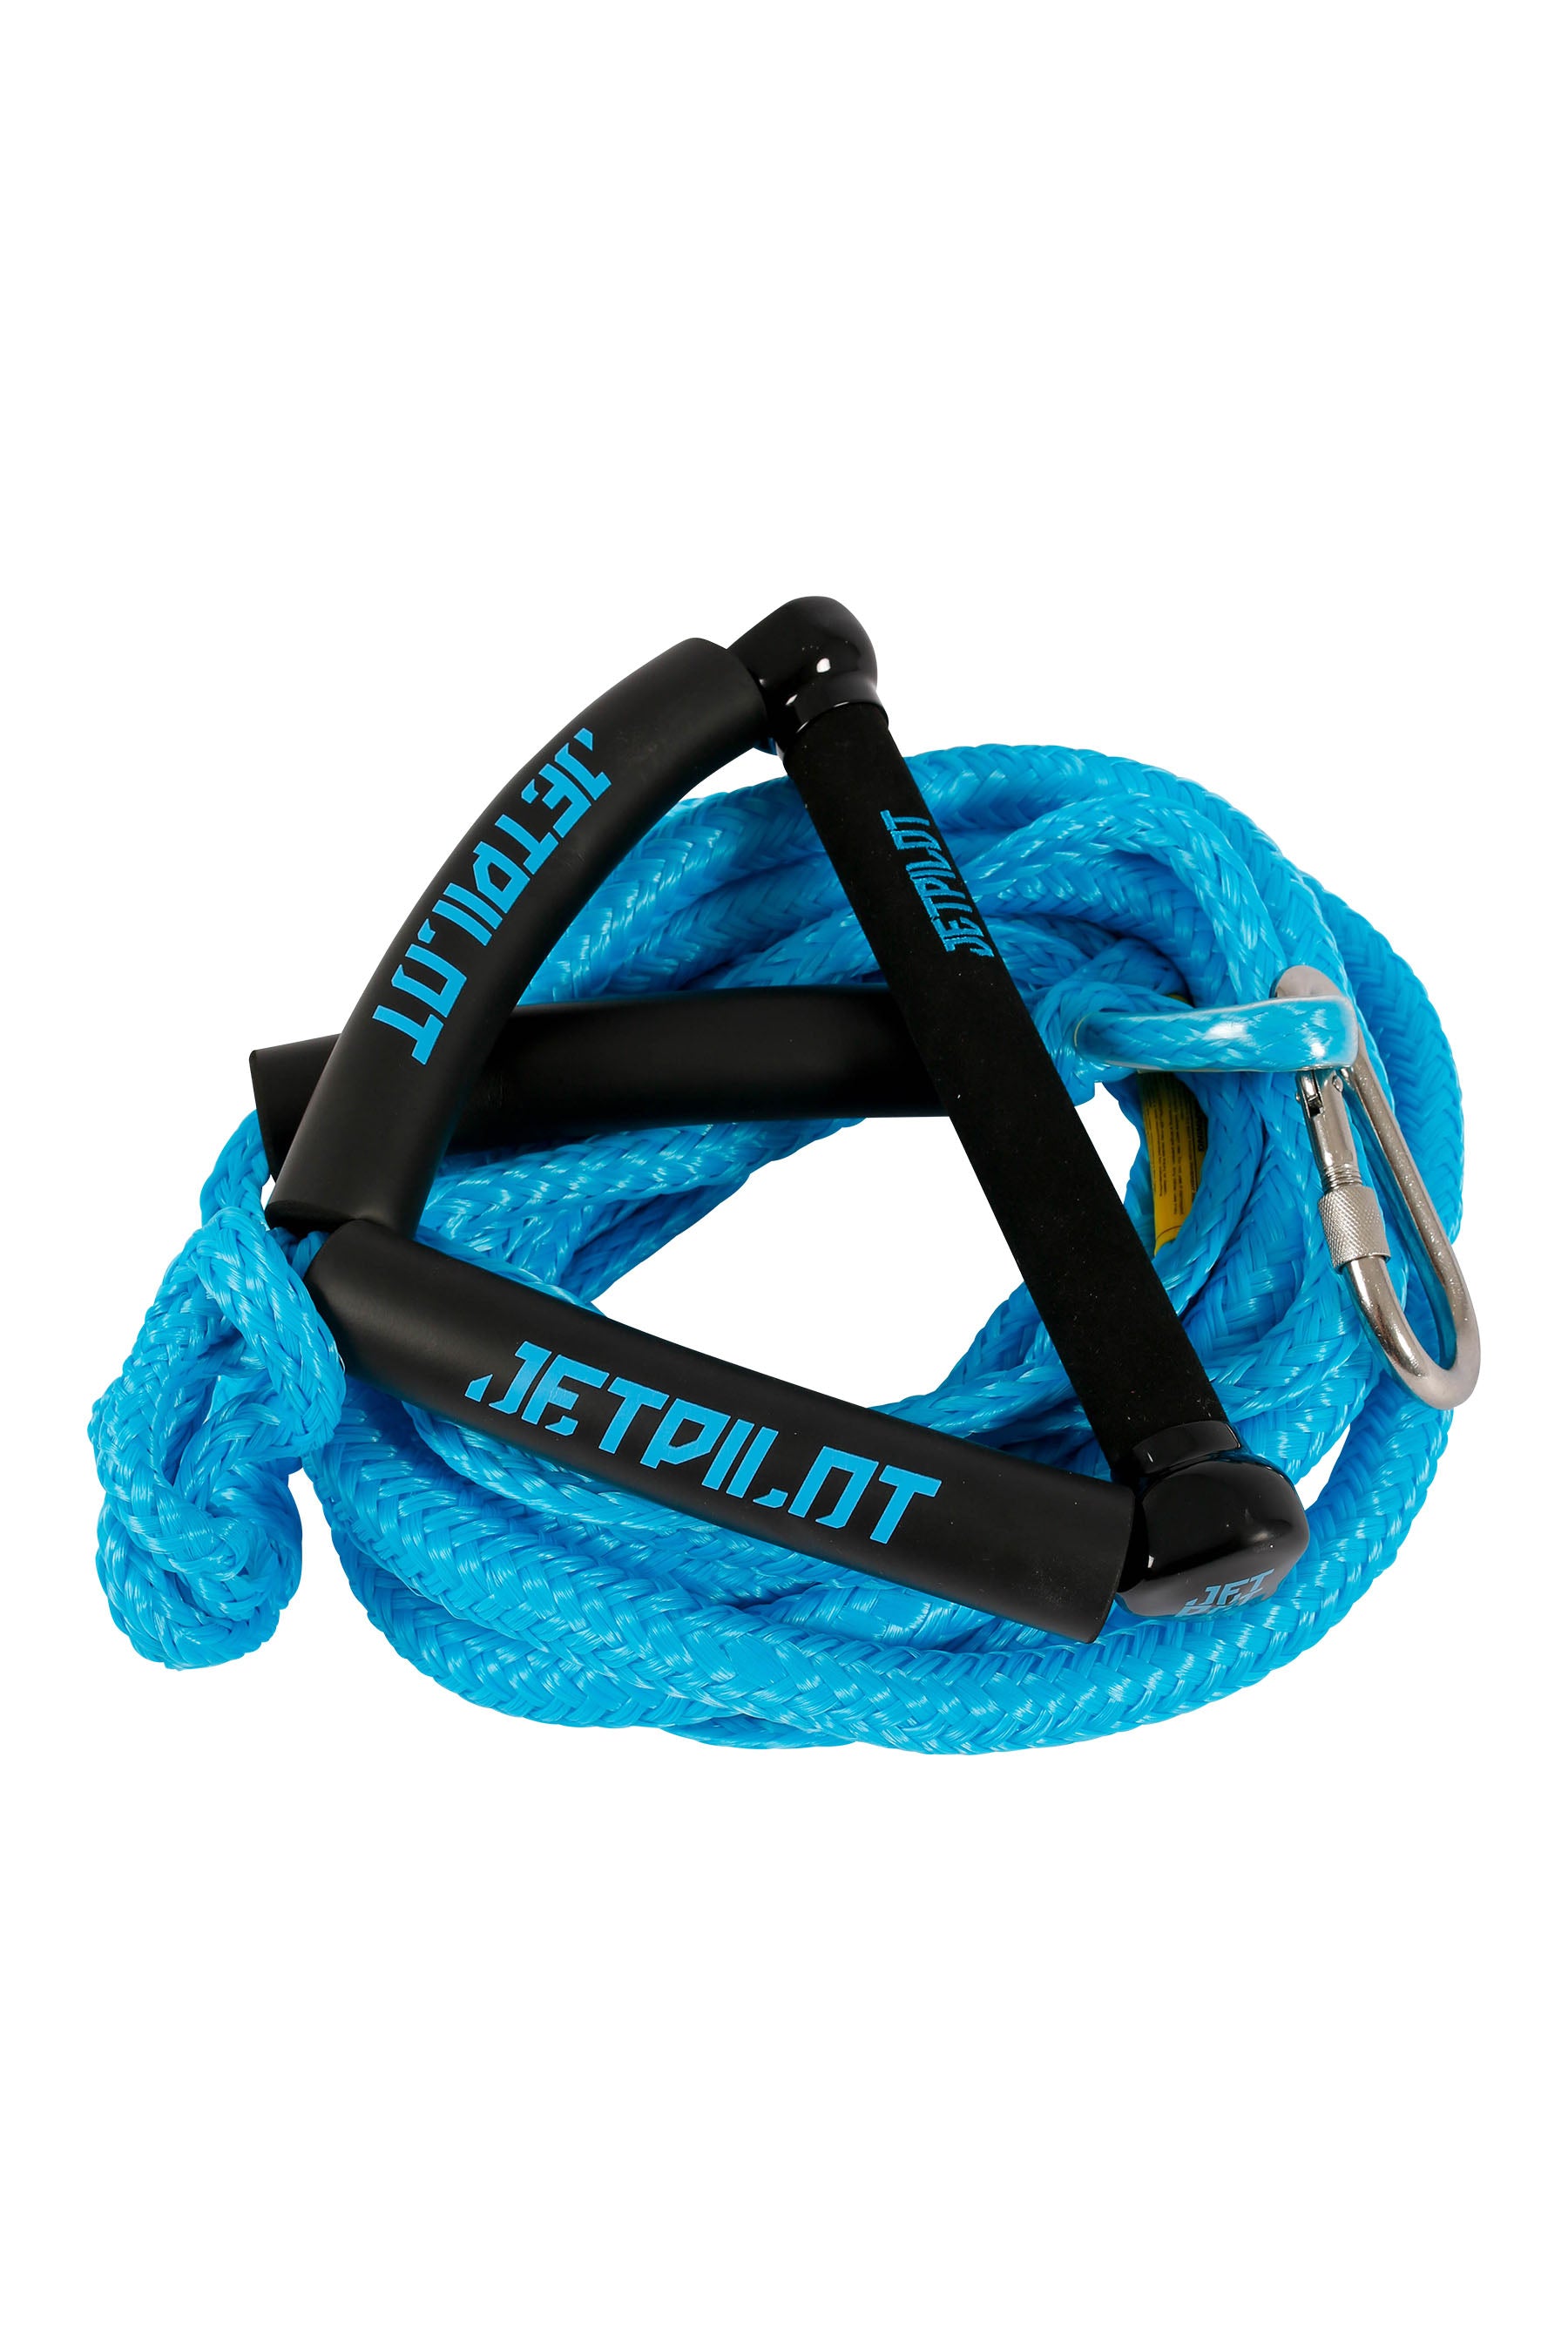 Jetpilot Jp Deluxe Tow Rope Combo Blue